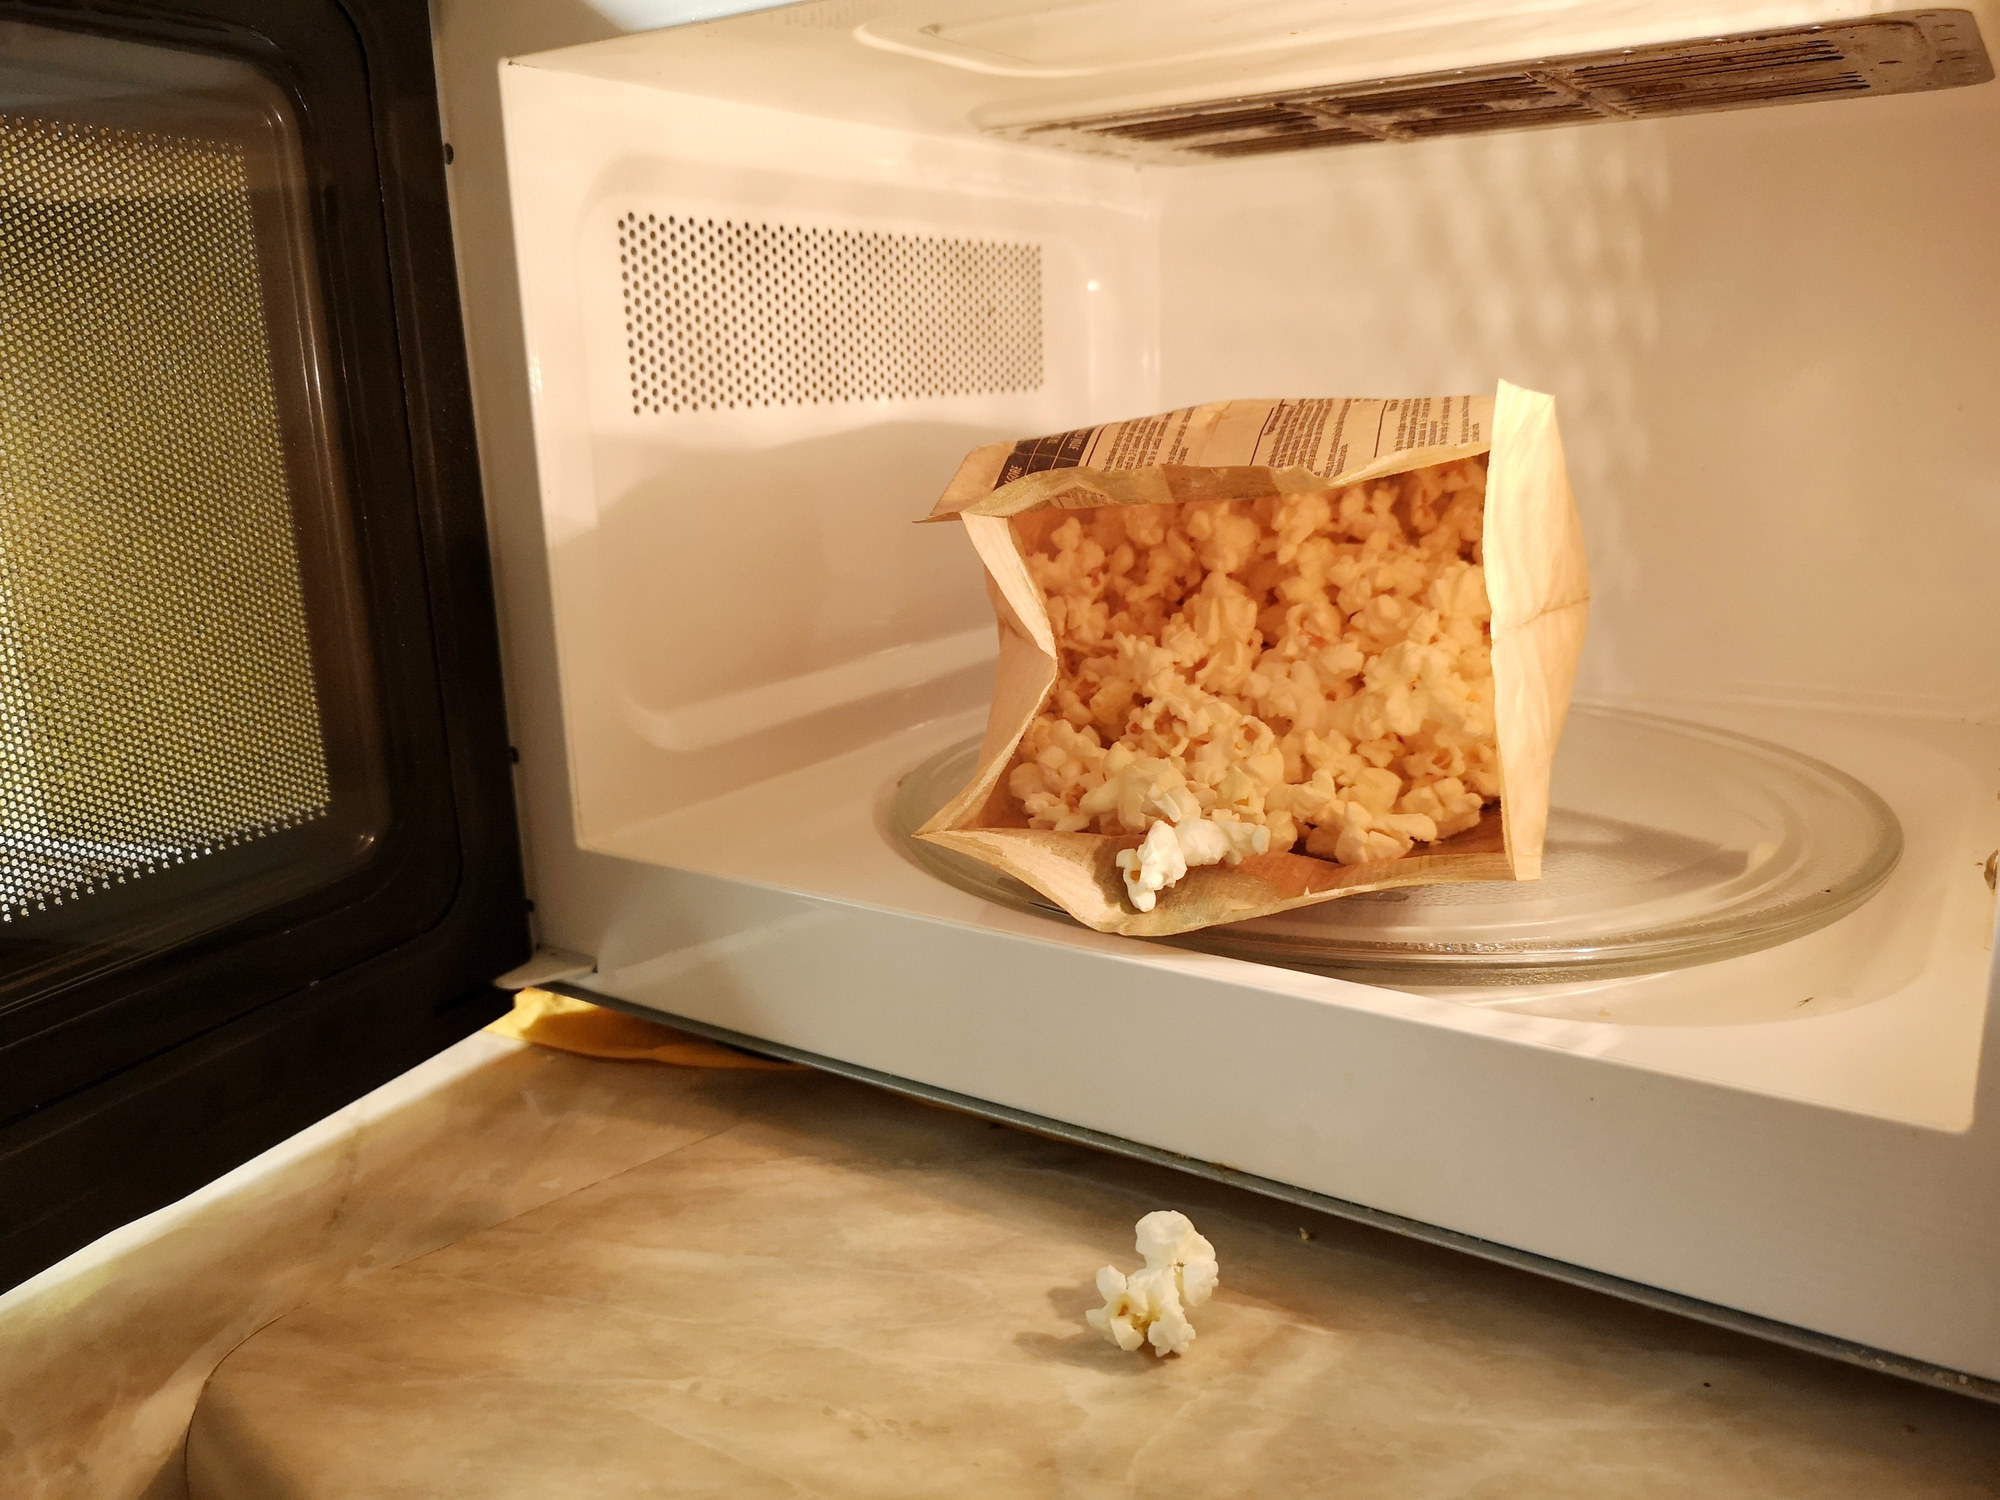 Microwave popcorn